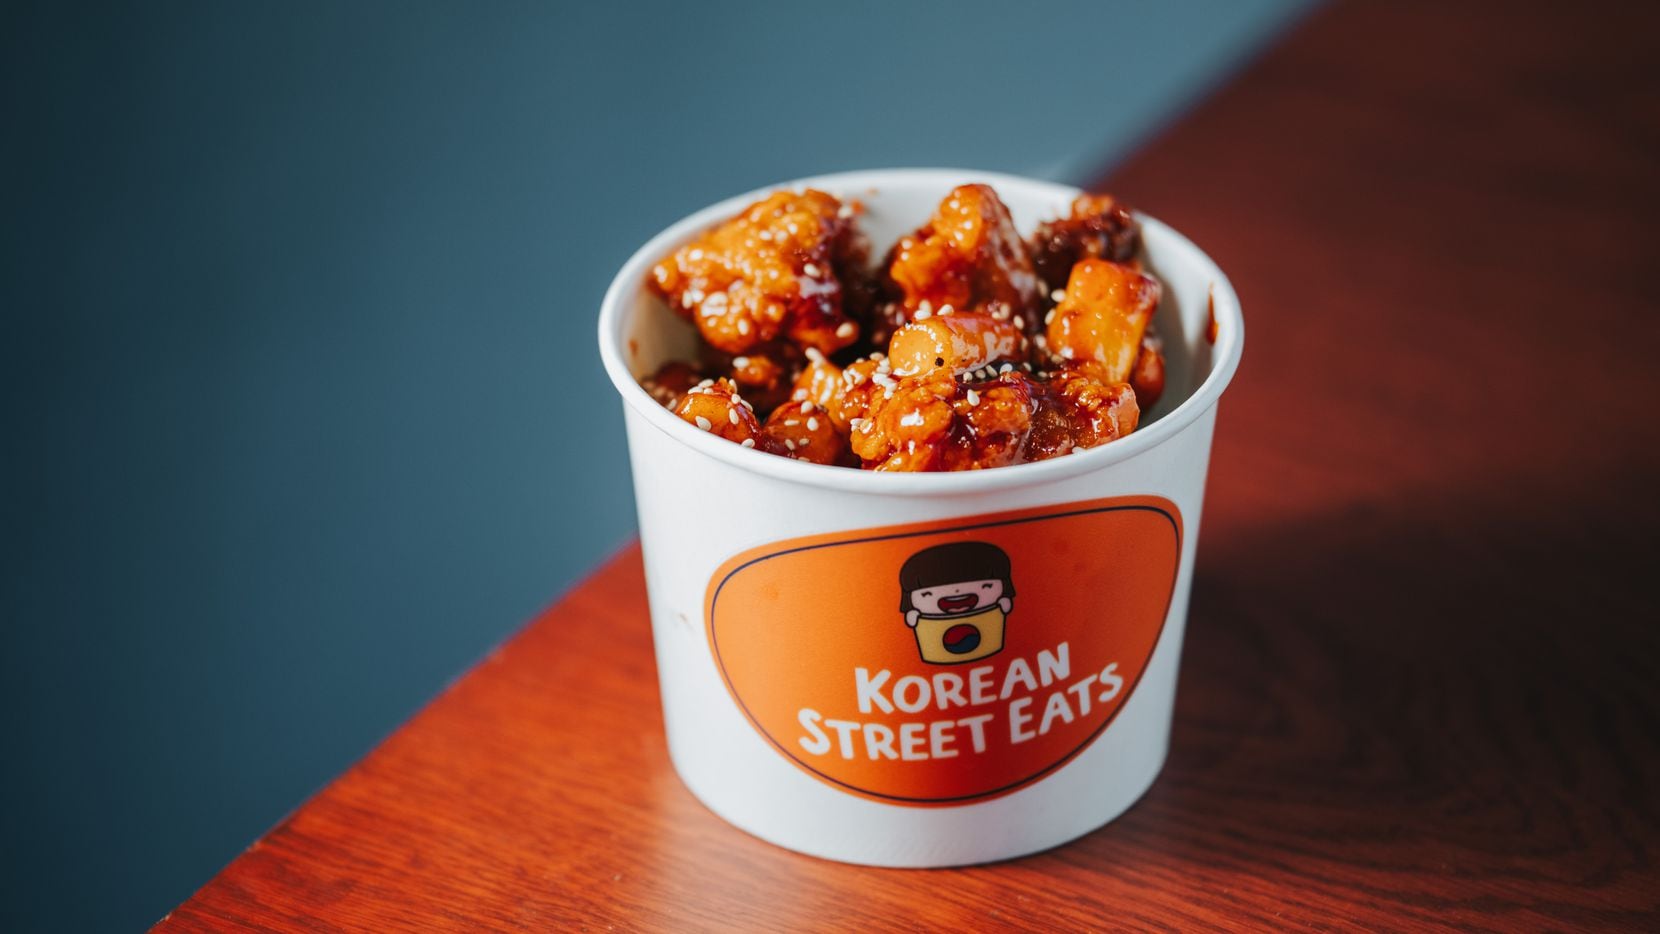 Korean Street Eats recently opened in Carrollton from Sarah Park.